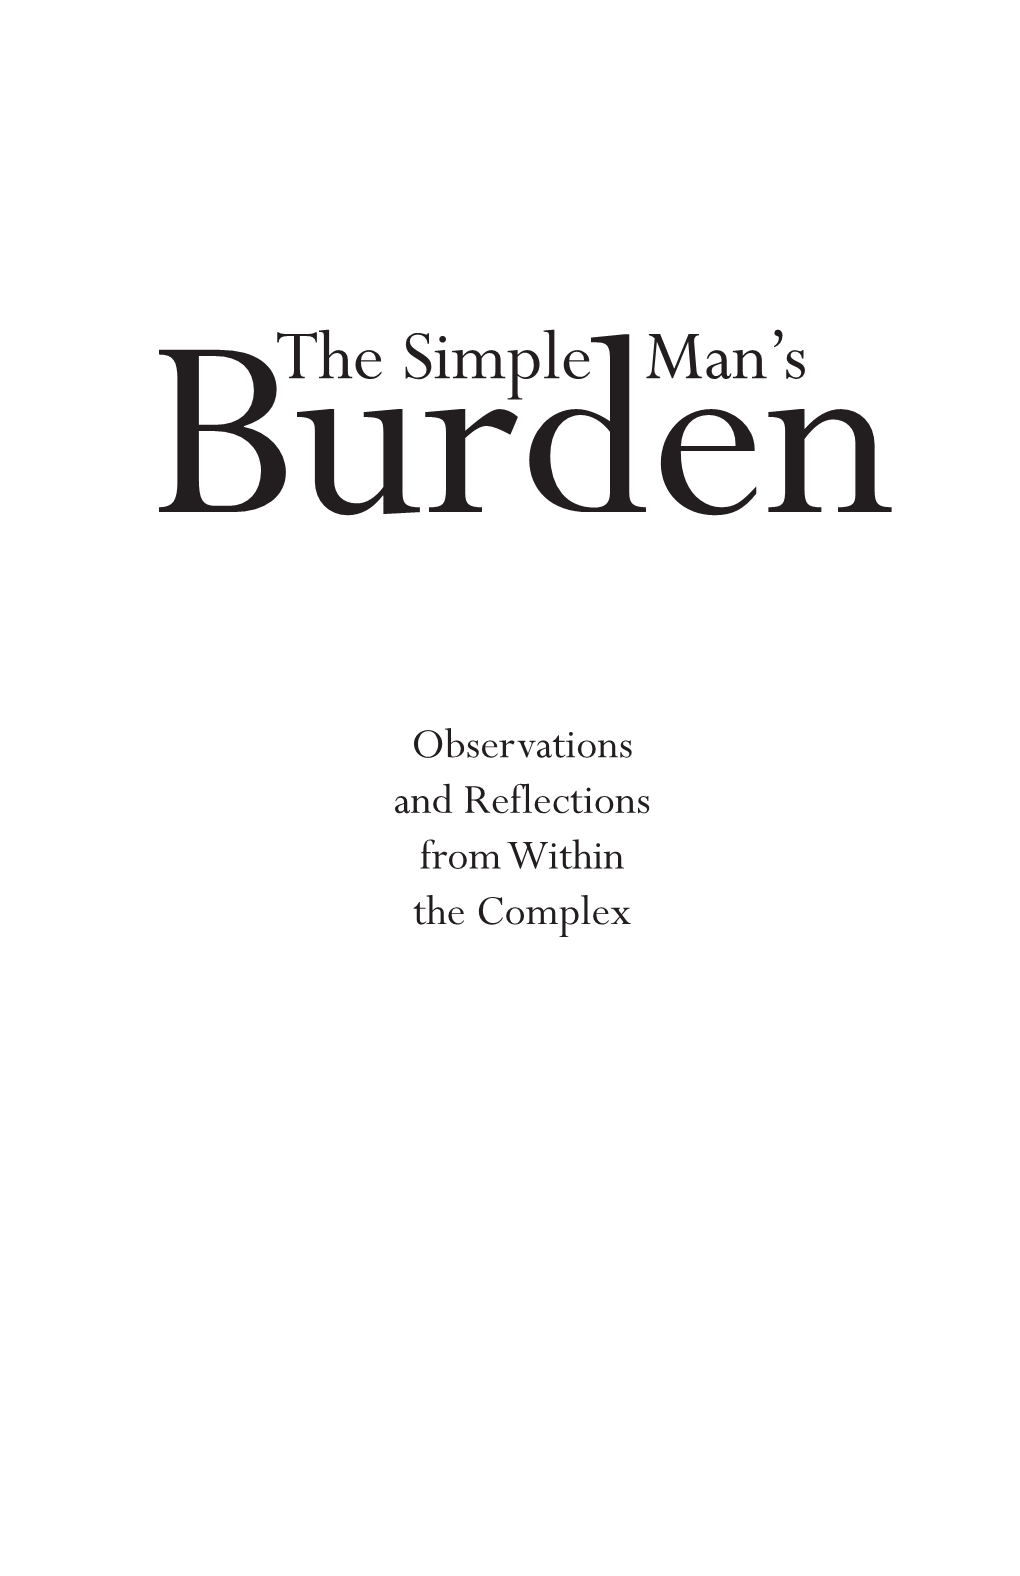 The Simple Man's Burden